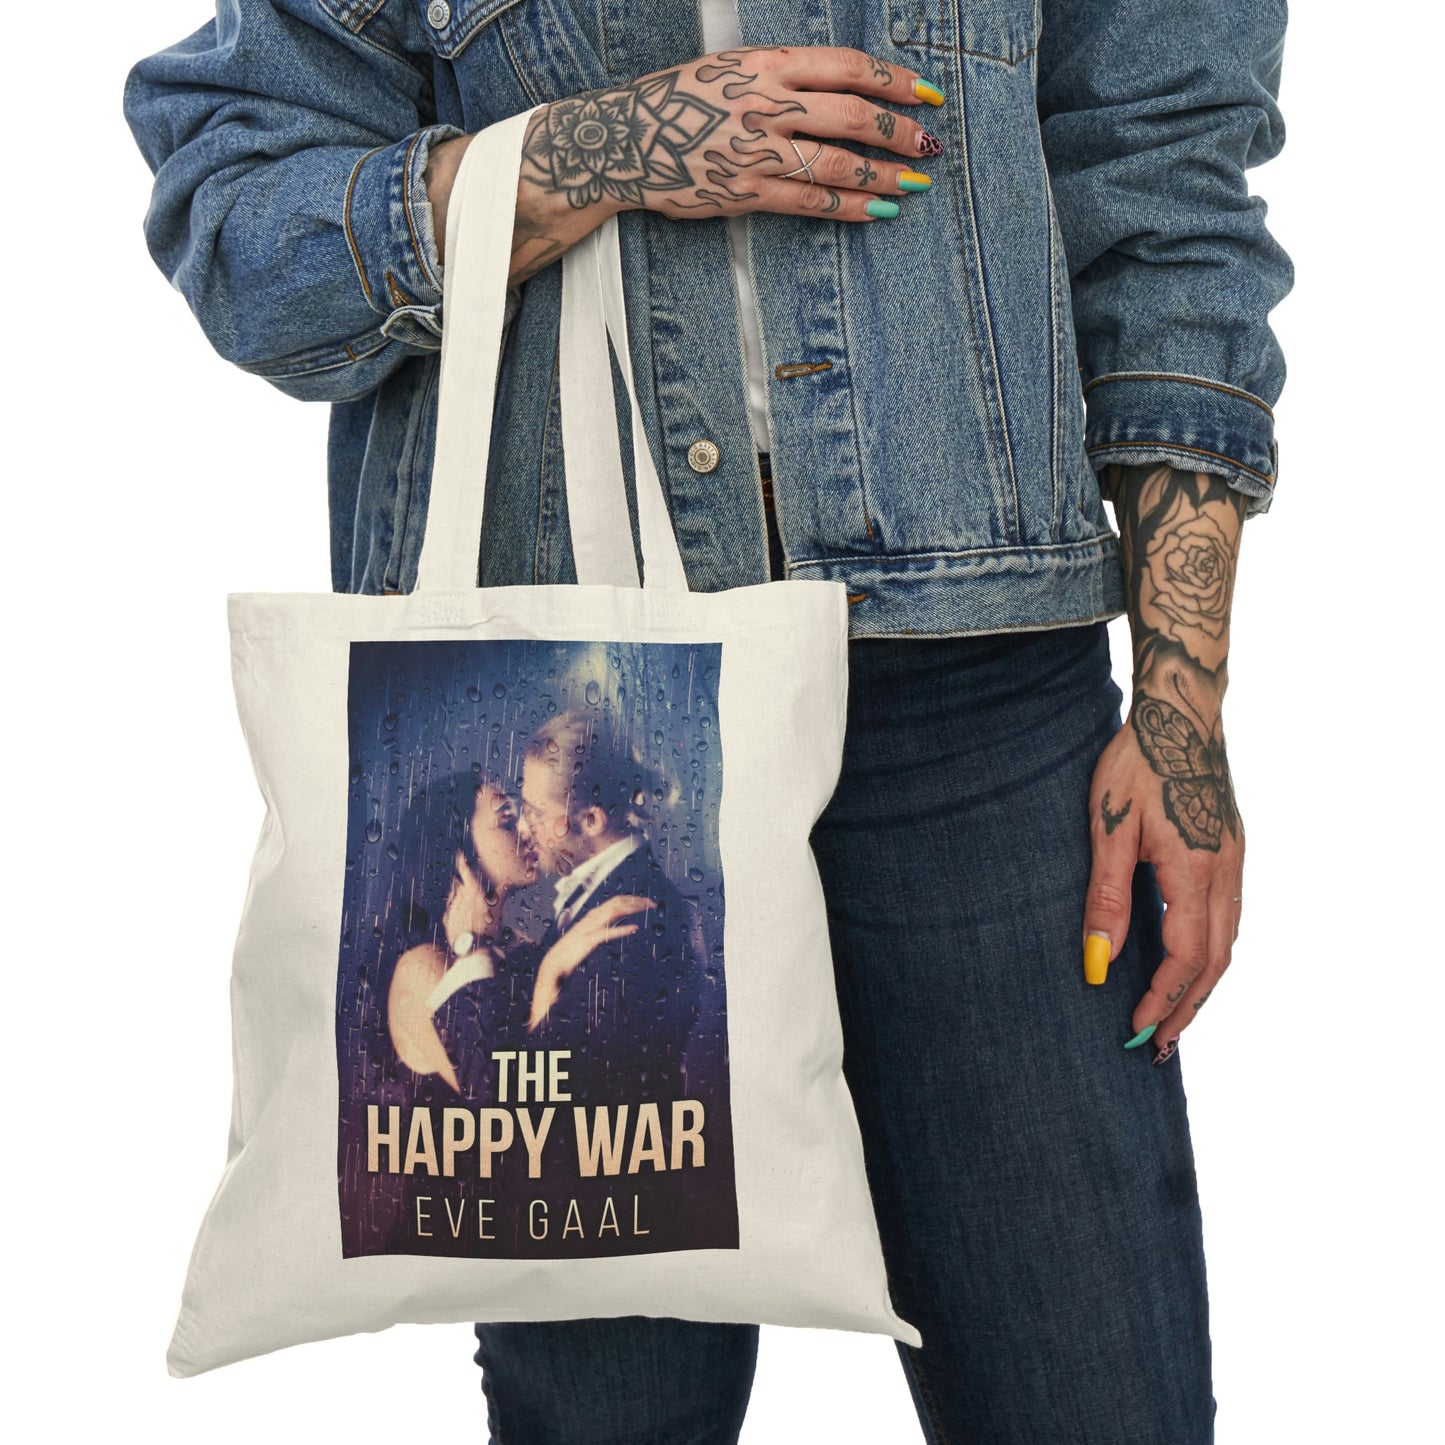 The Happy War - Natural Tote Bag